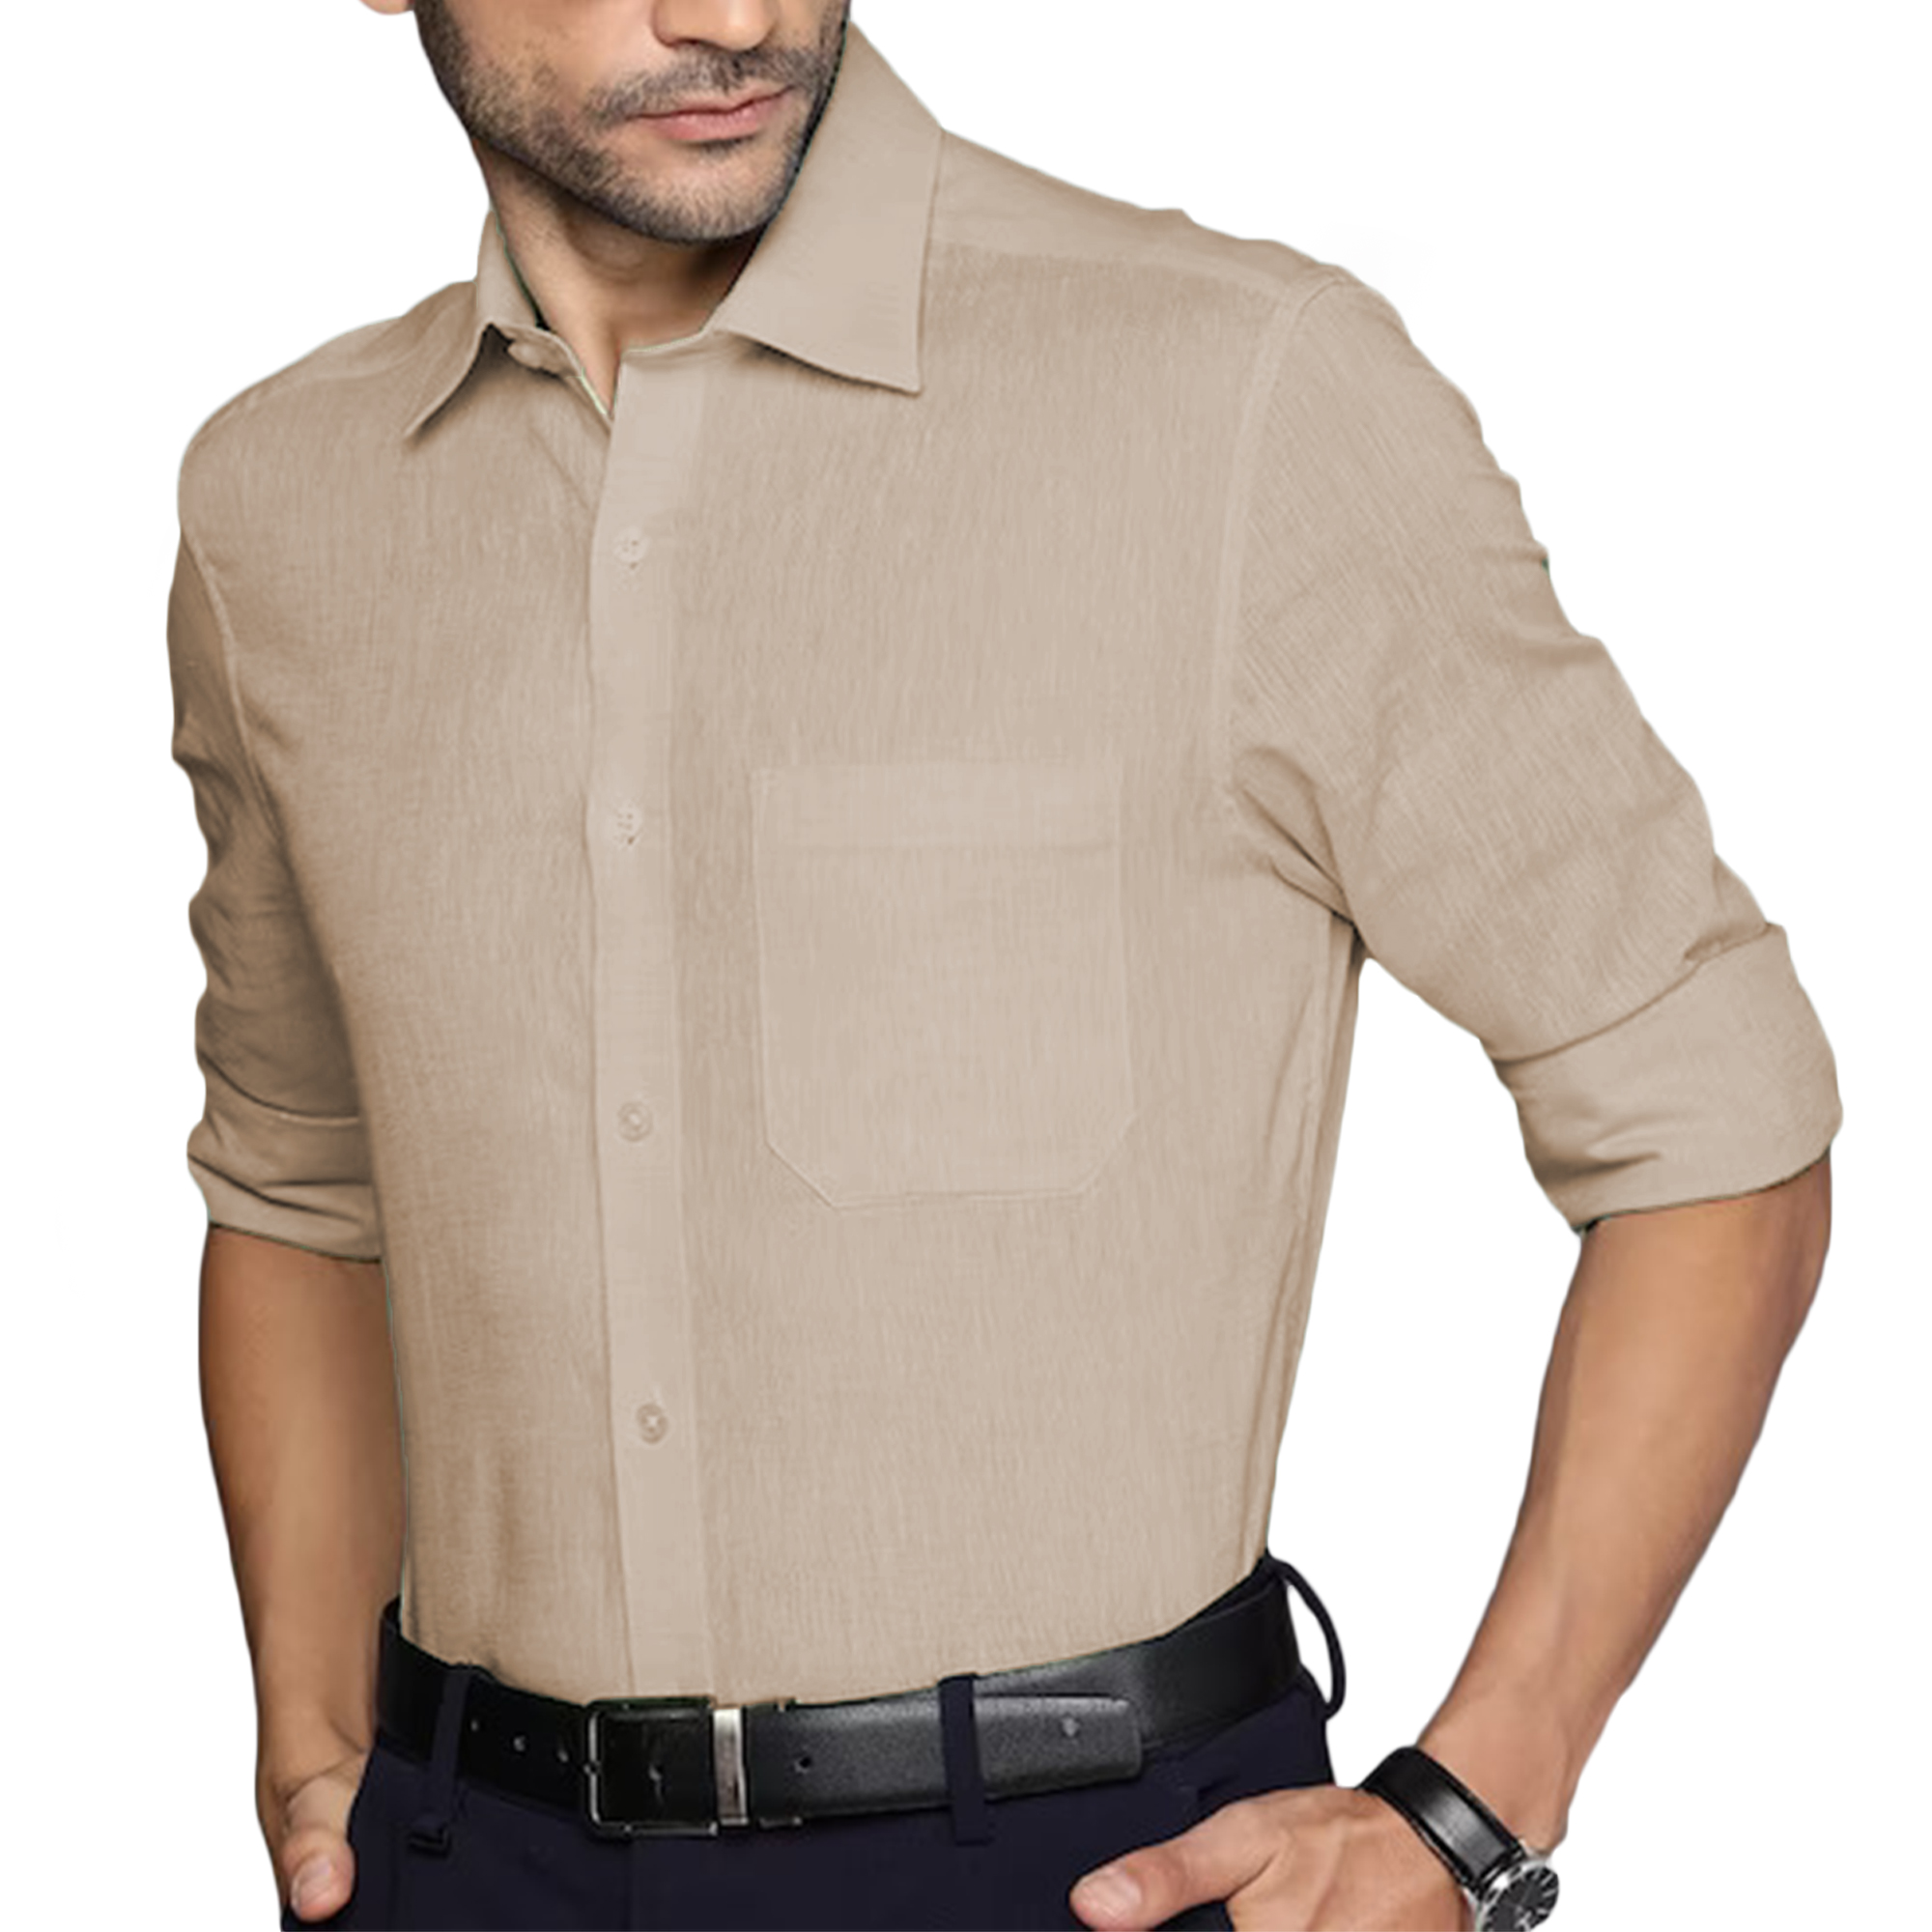 Men's Formal Shirt Beige - Callibr15